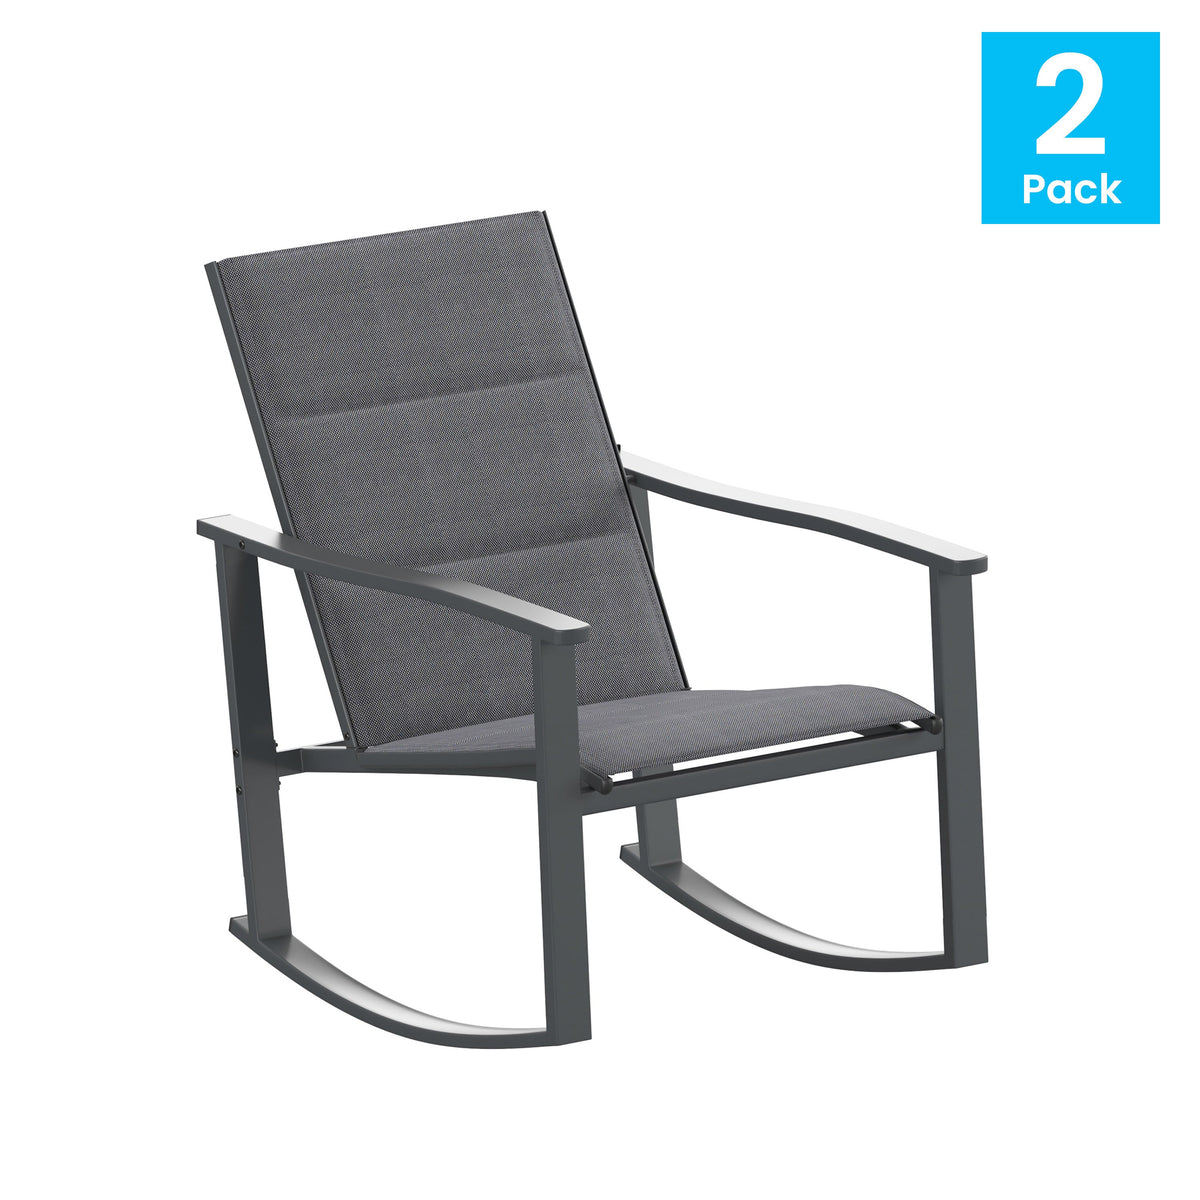 Black |#| Set of 2 All Weather Flex Comfort Rocking Chairs with Metal Frames-Black/Black